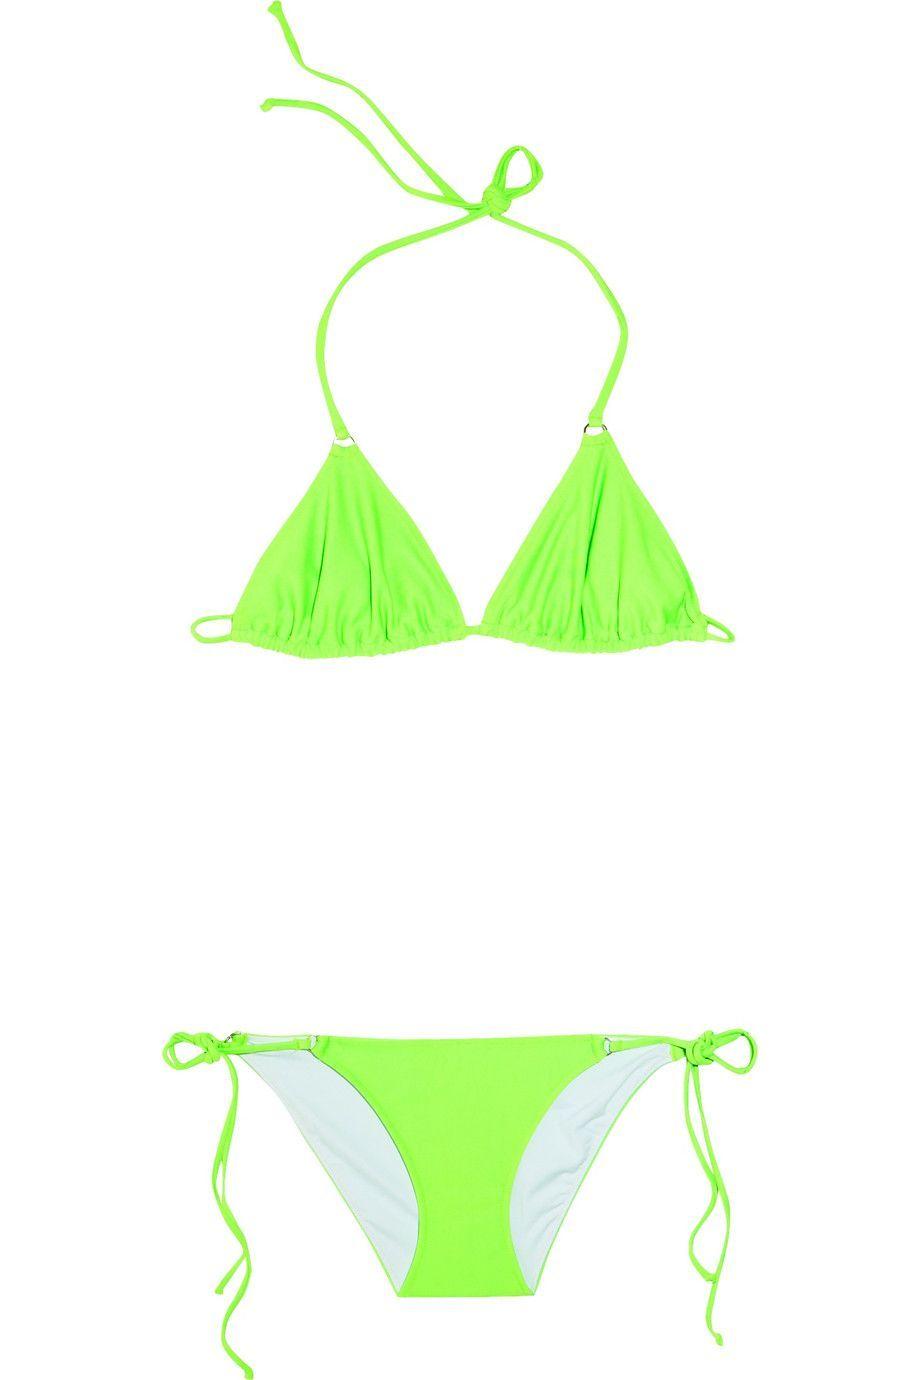 Neon Green Triangle Logo - shimmi neon green birkin triangle bikini. Neon & Color. Bikinis